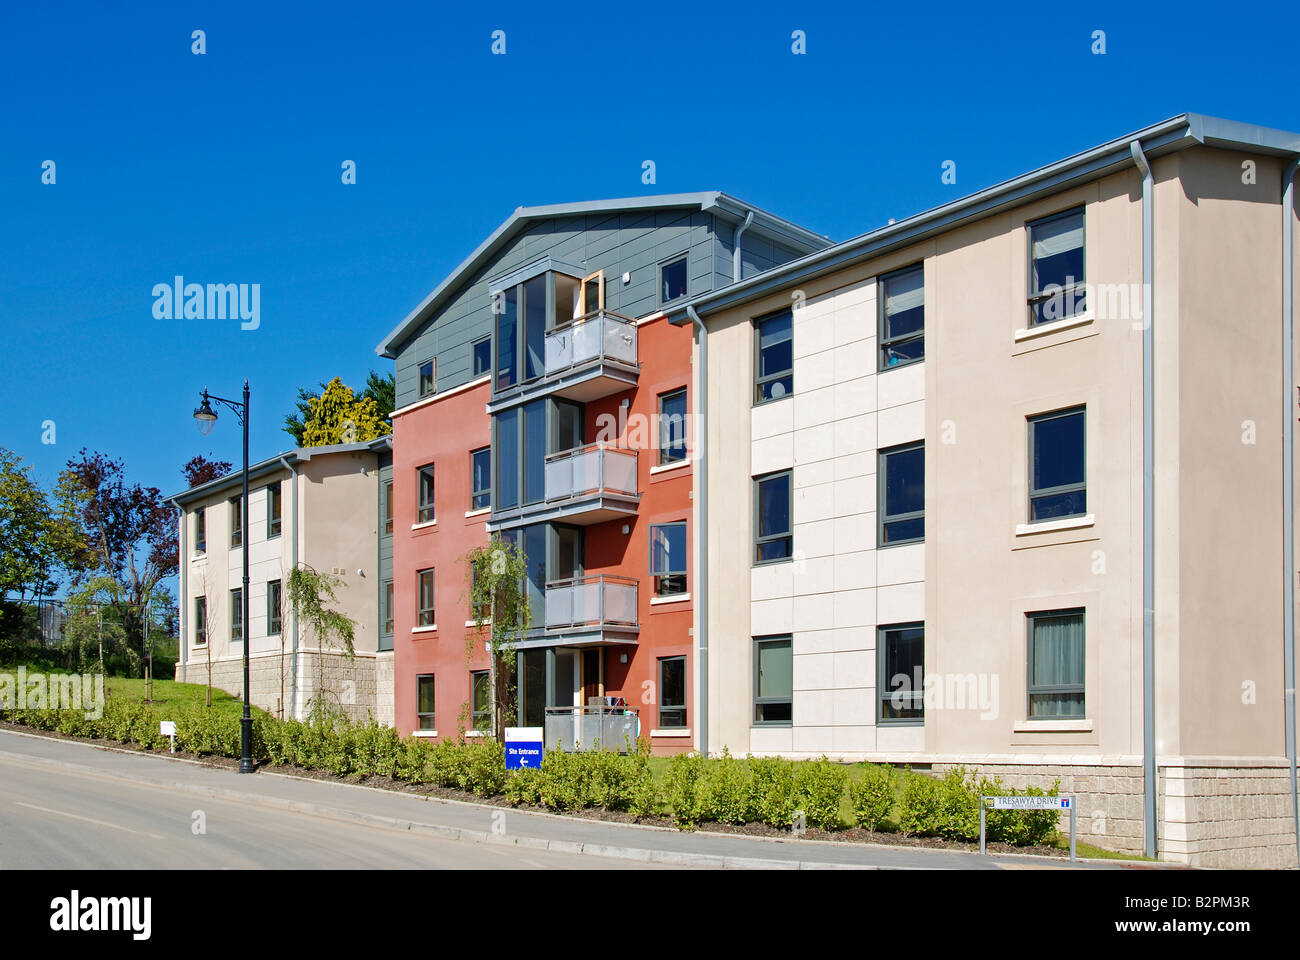 an affordable housing scheme development in truro,cornwall,uk Stock Photo